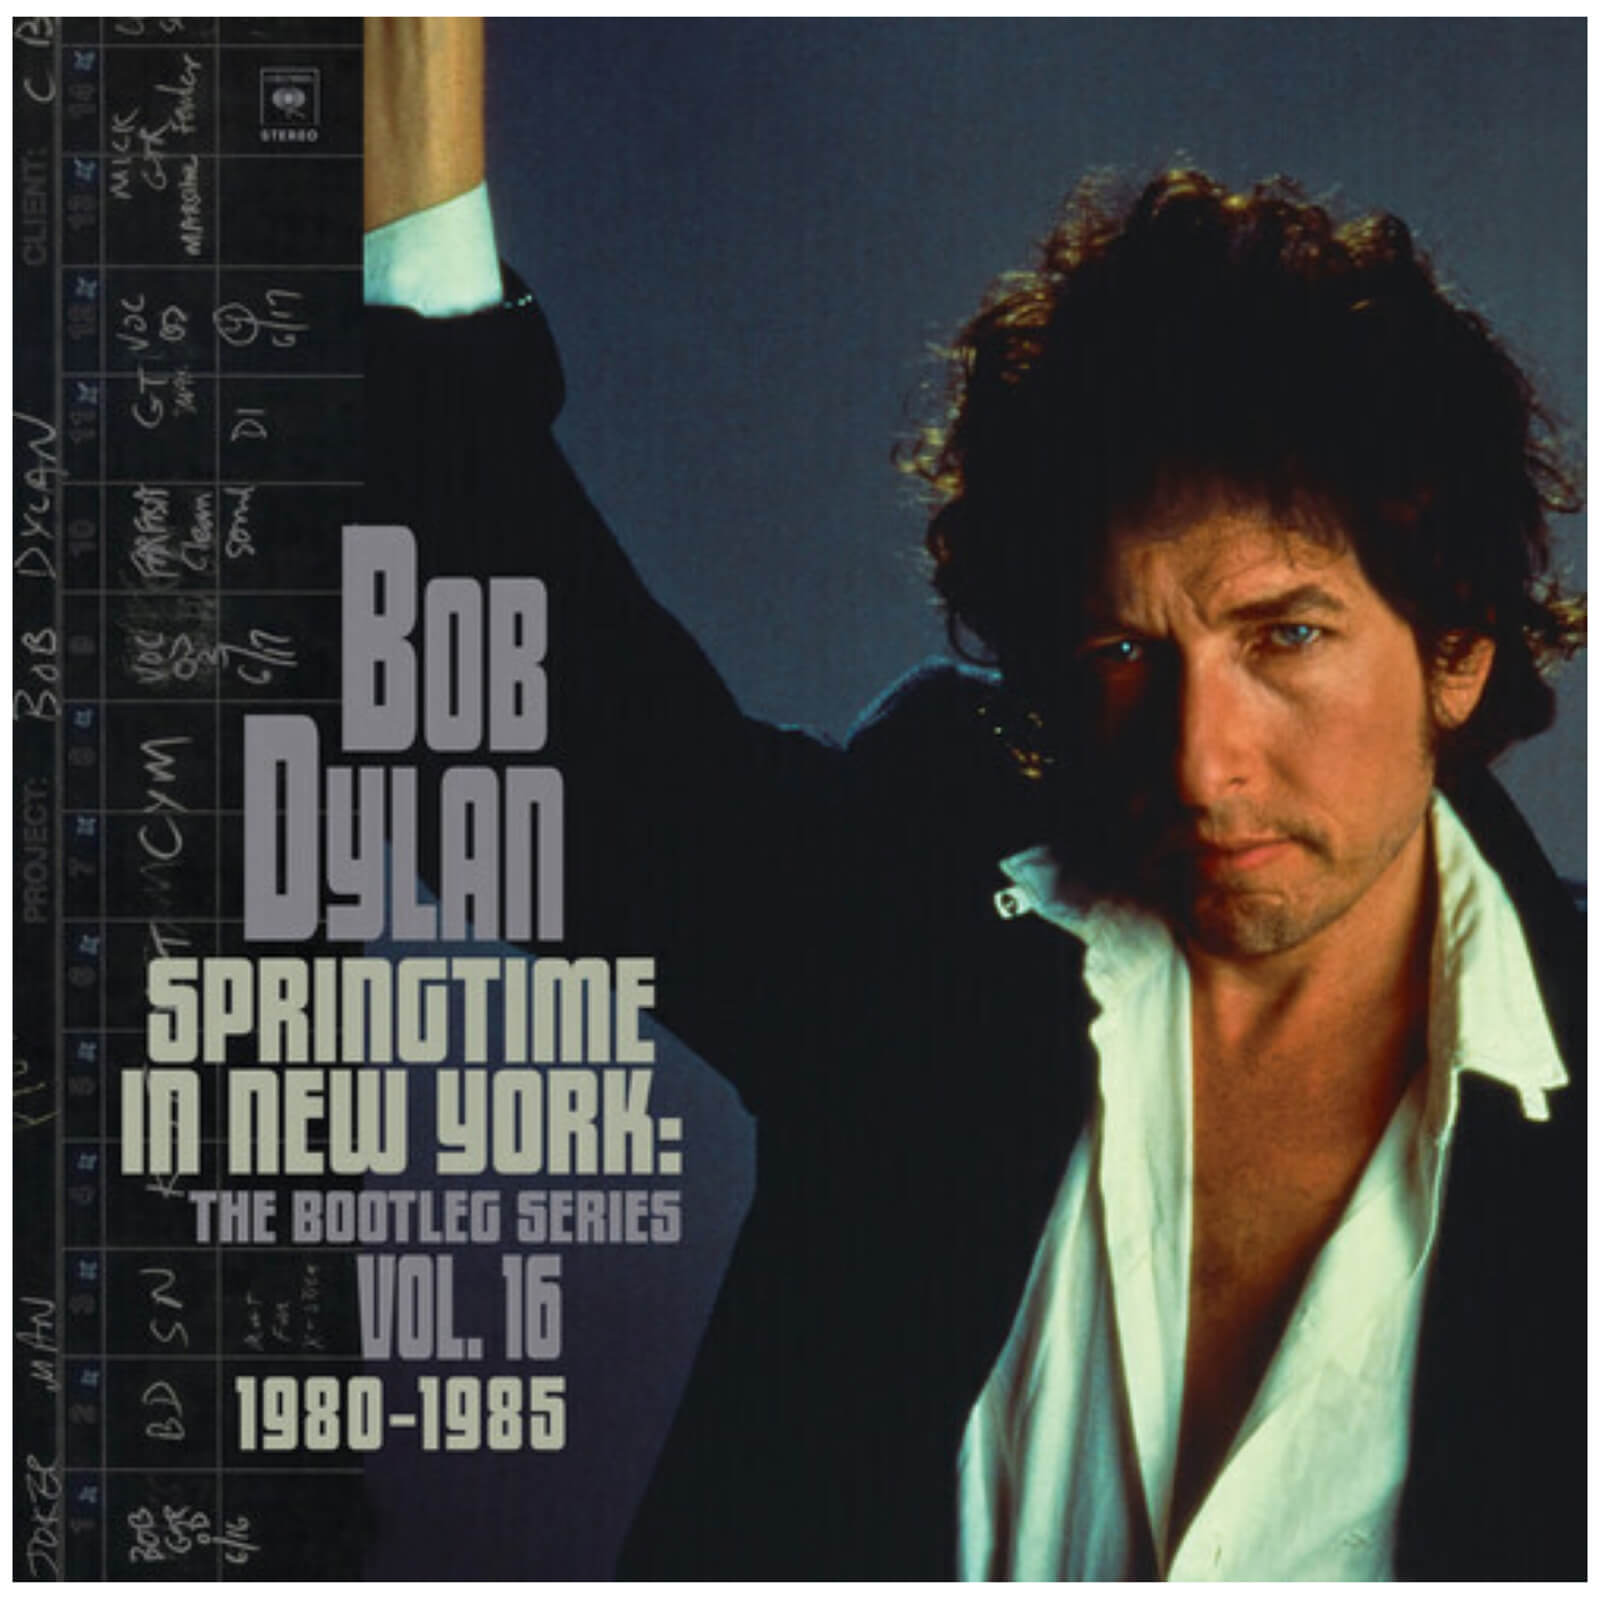 Bob Dylan - Springtime In New York: The Bootleg Series Vol. 16 (1980-1985) 150g 2xLP